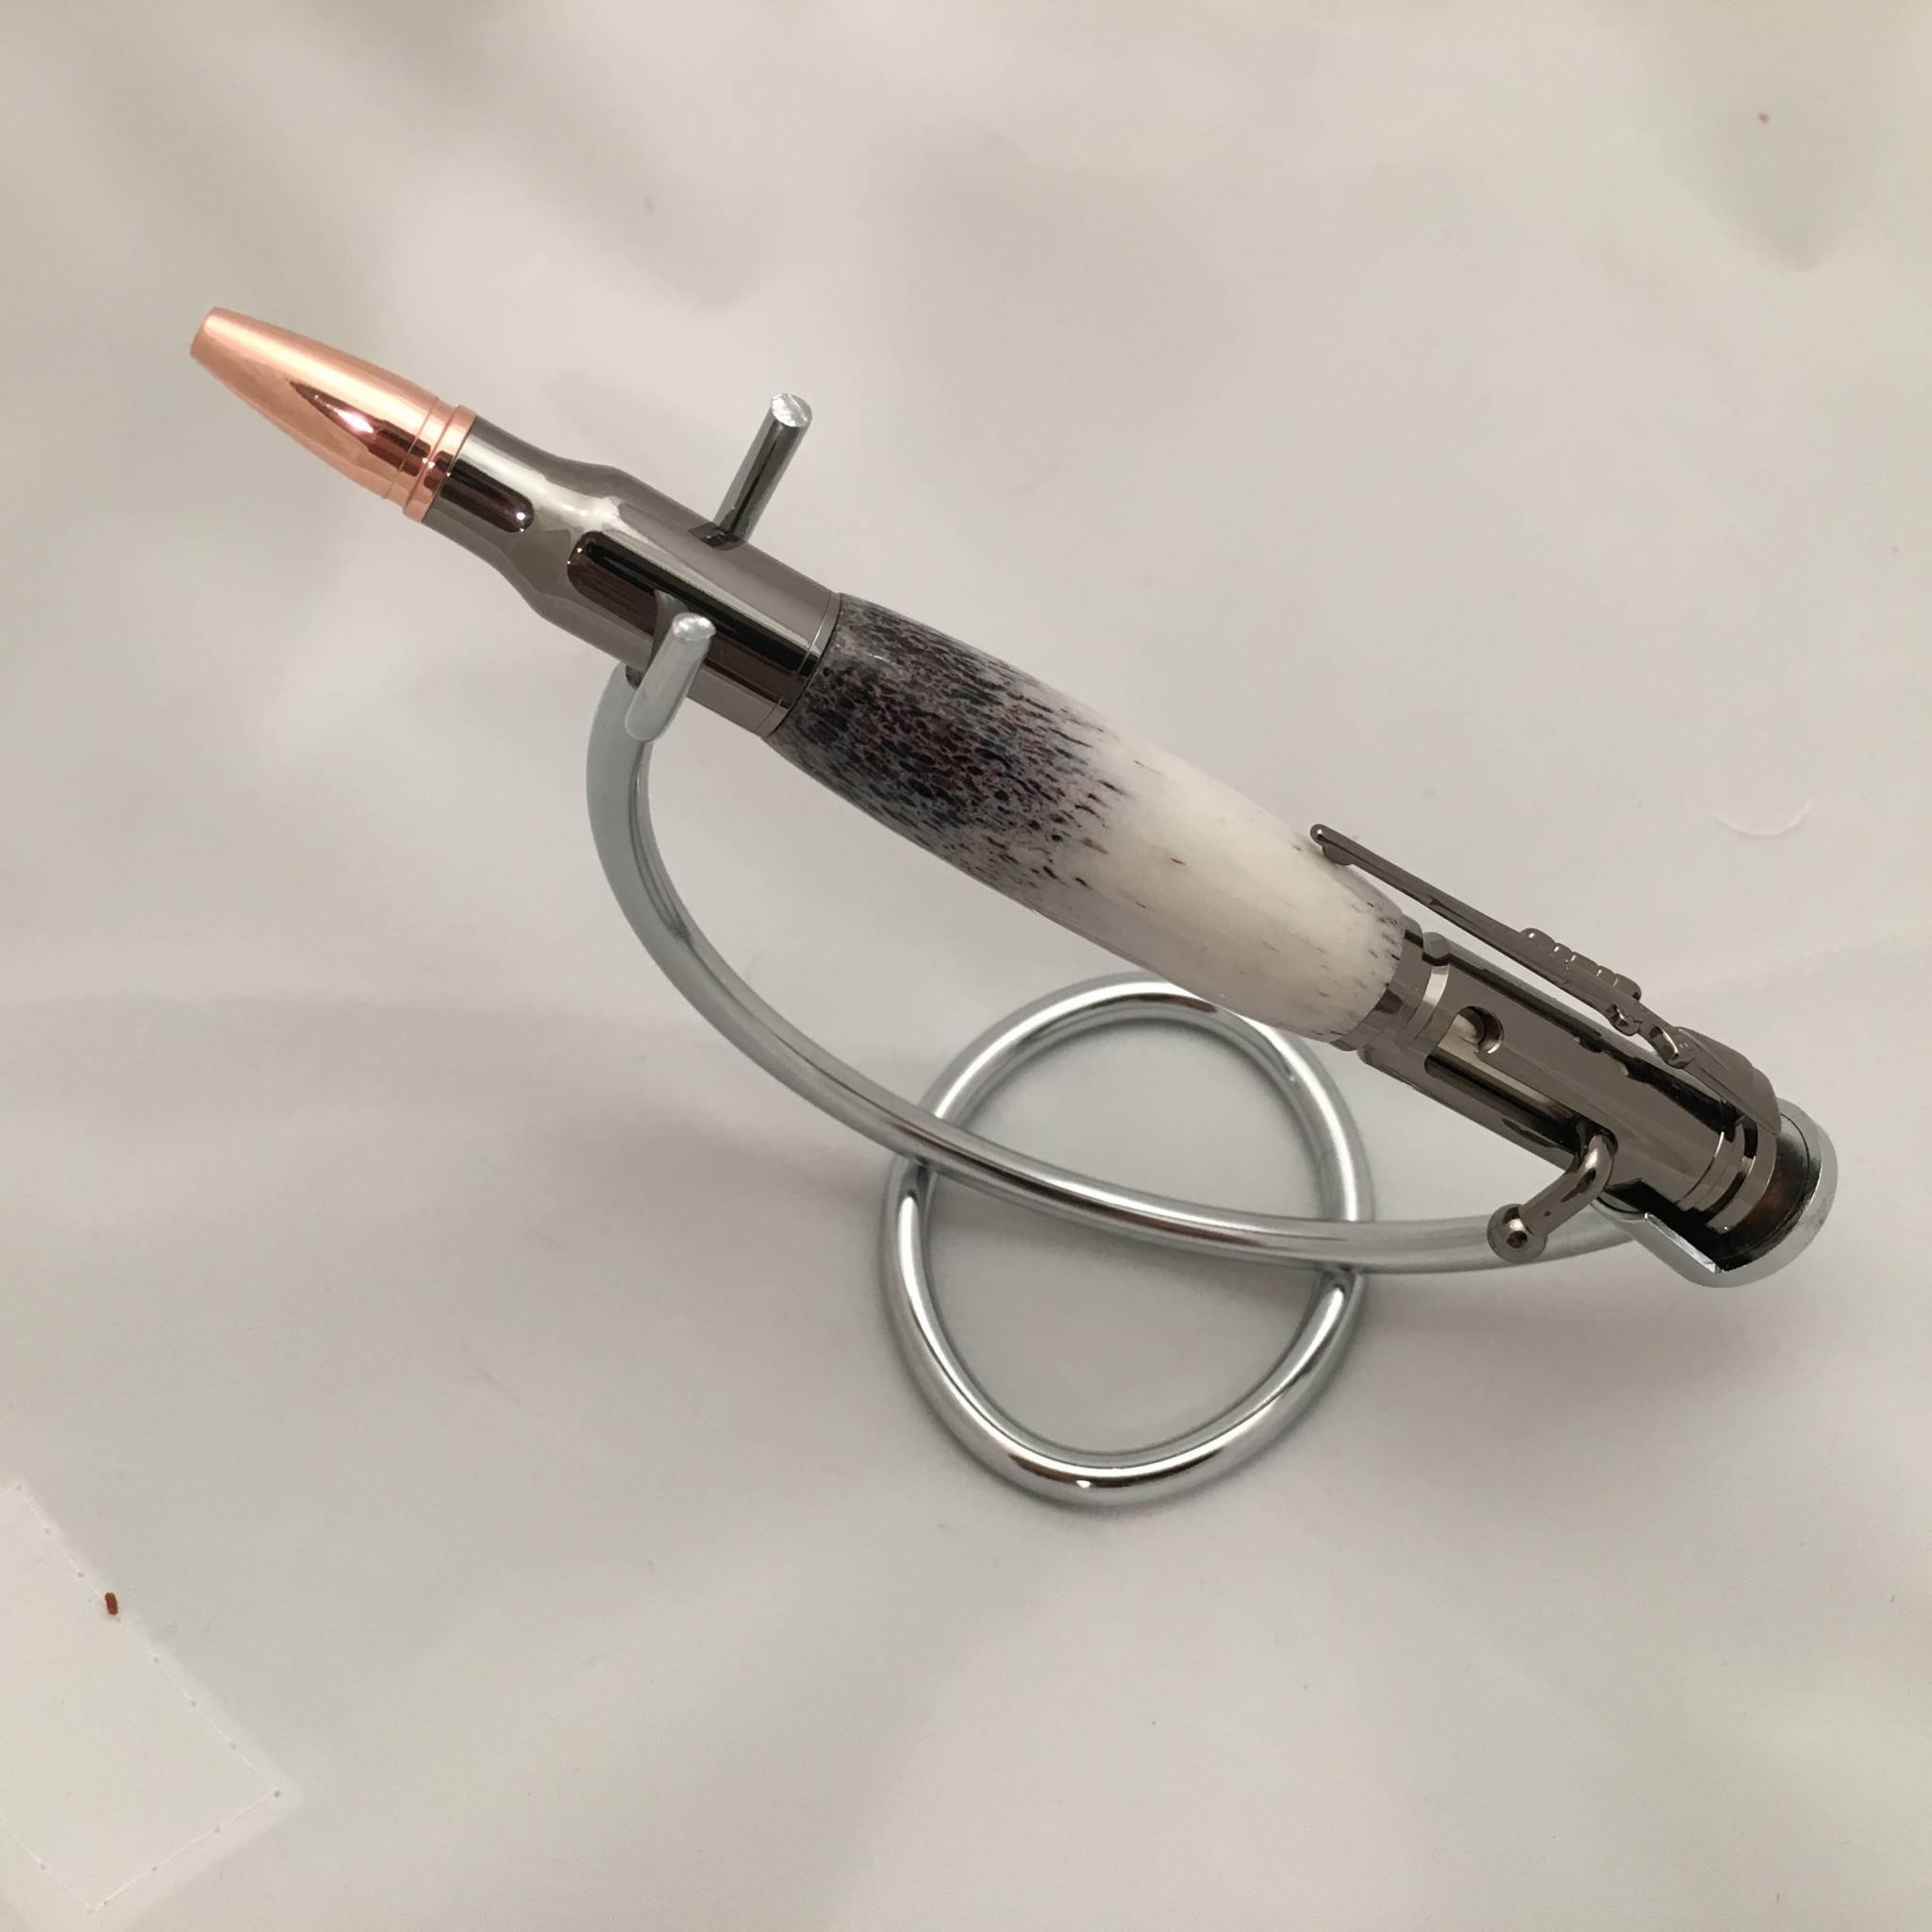 30 cal bullet pen w/ Deer Antler